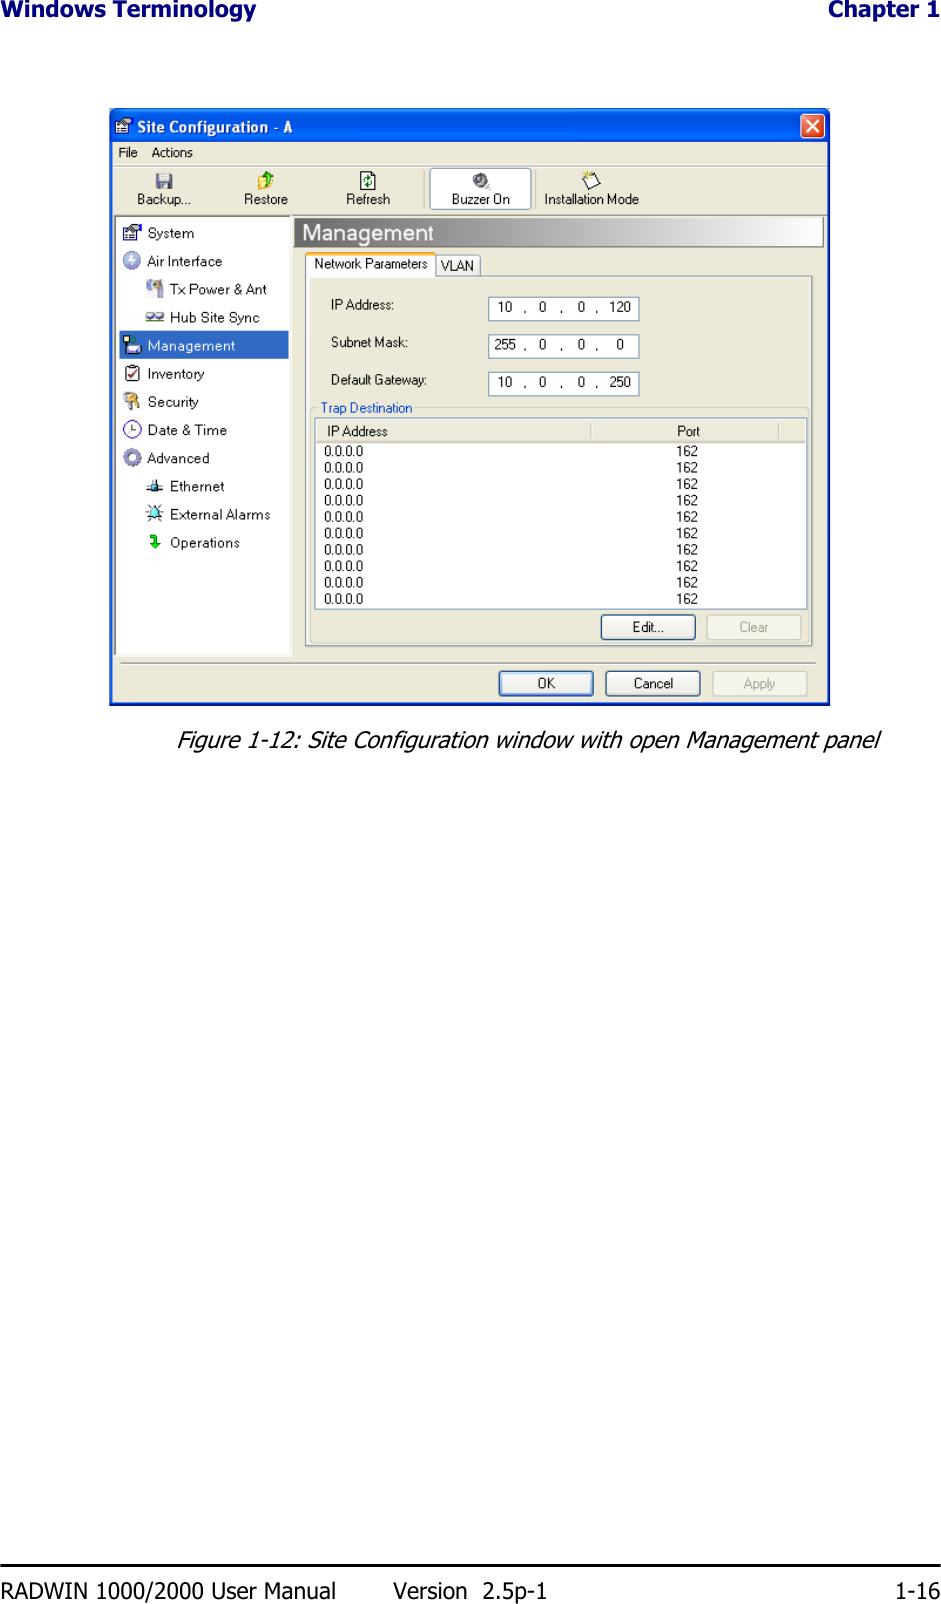 Windows Terminology  Chapter 1RADWIN 1000/2000 User Manual Version  2.5p-1 1-16Figure 1-12: Site Configuration window with open Management panel